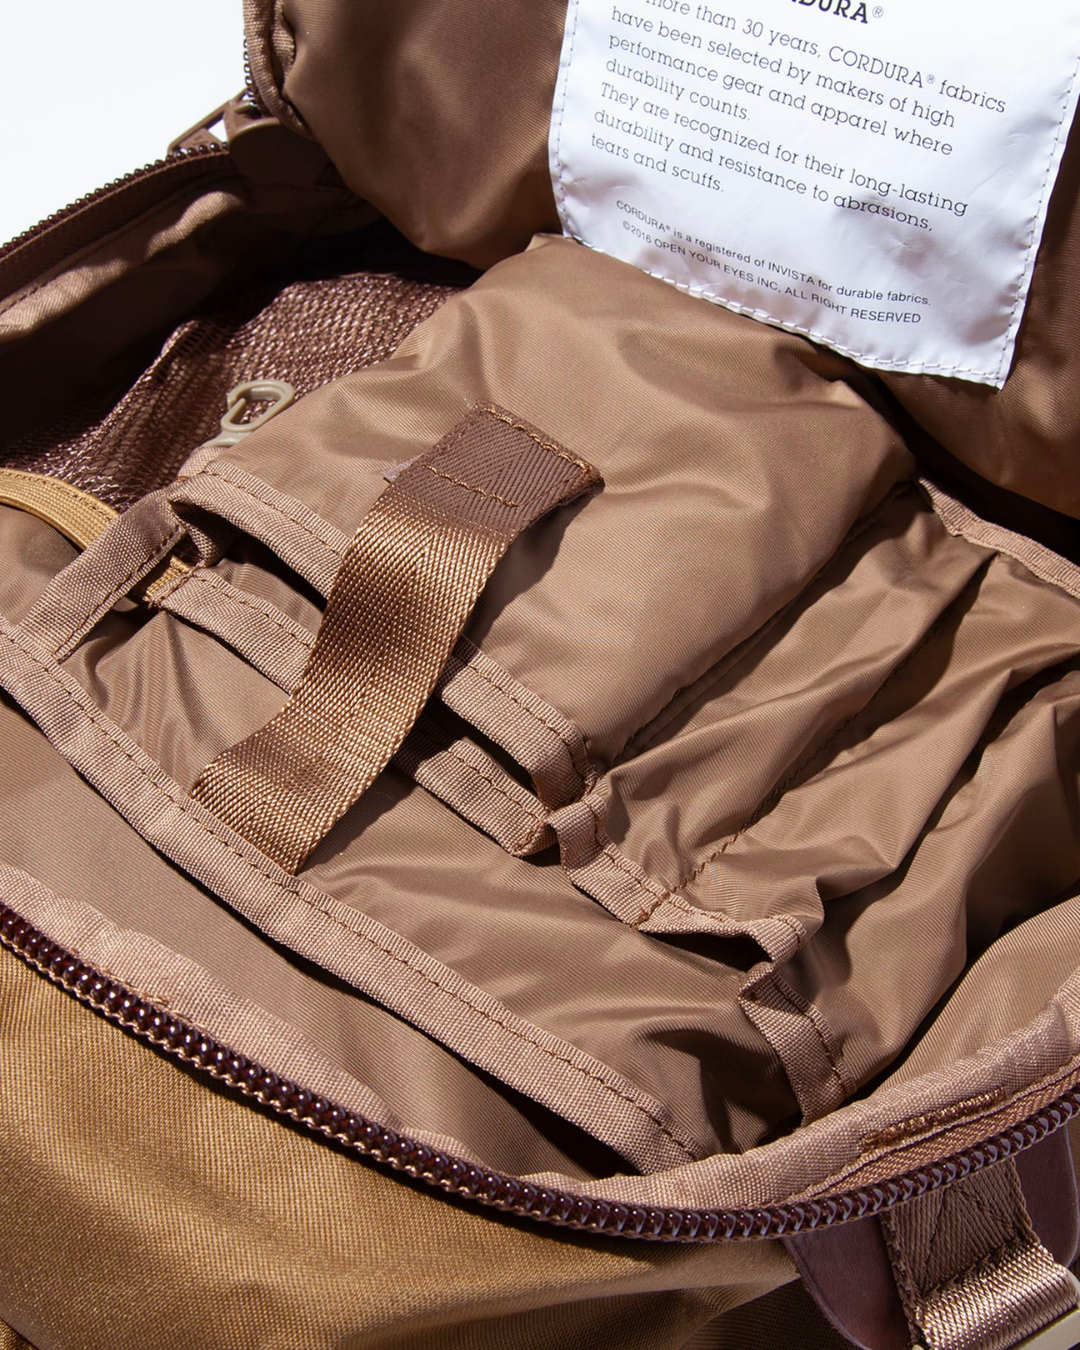 F/CE Satin Travel Backpack - Black